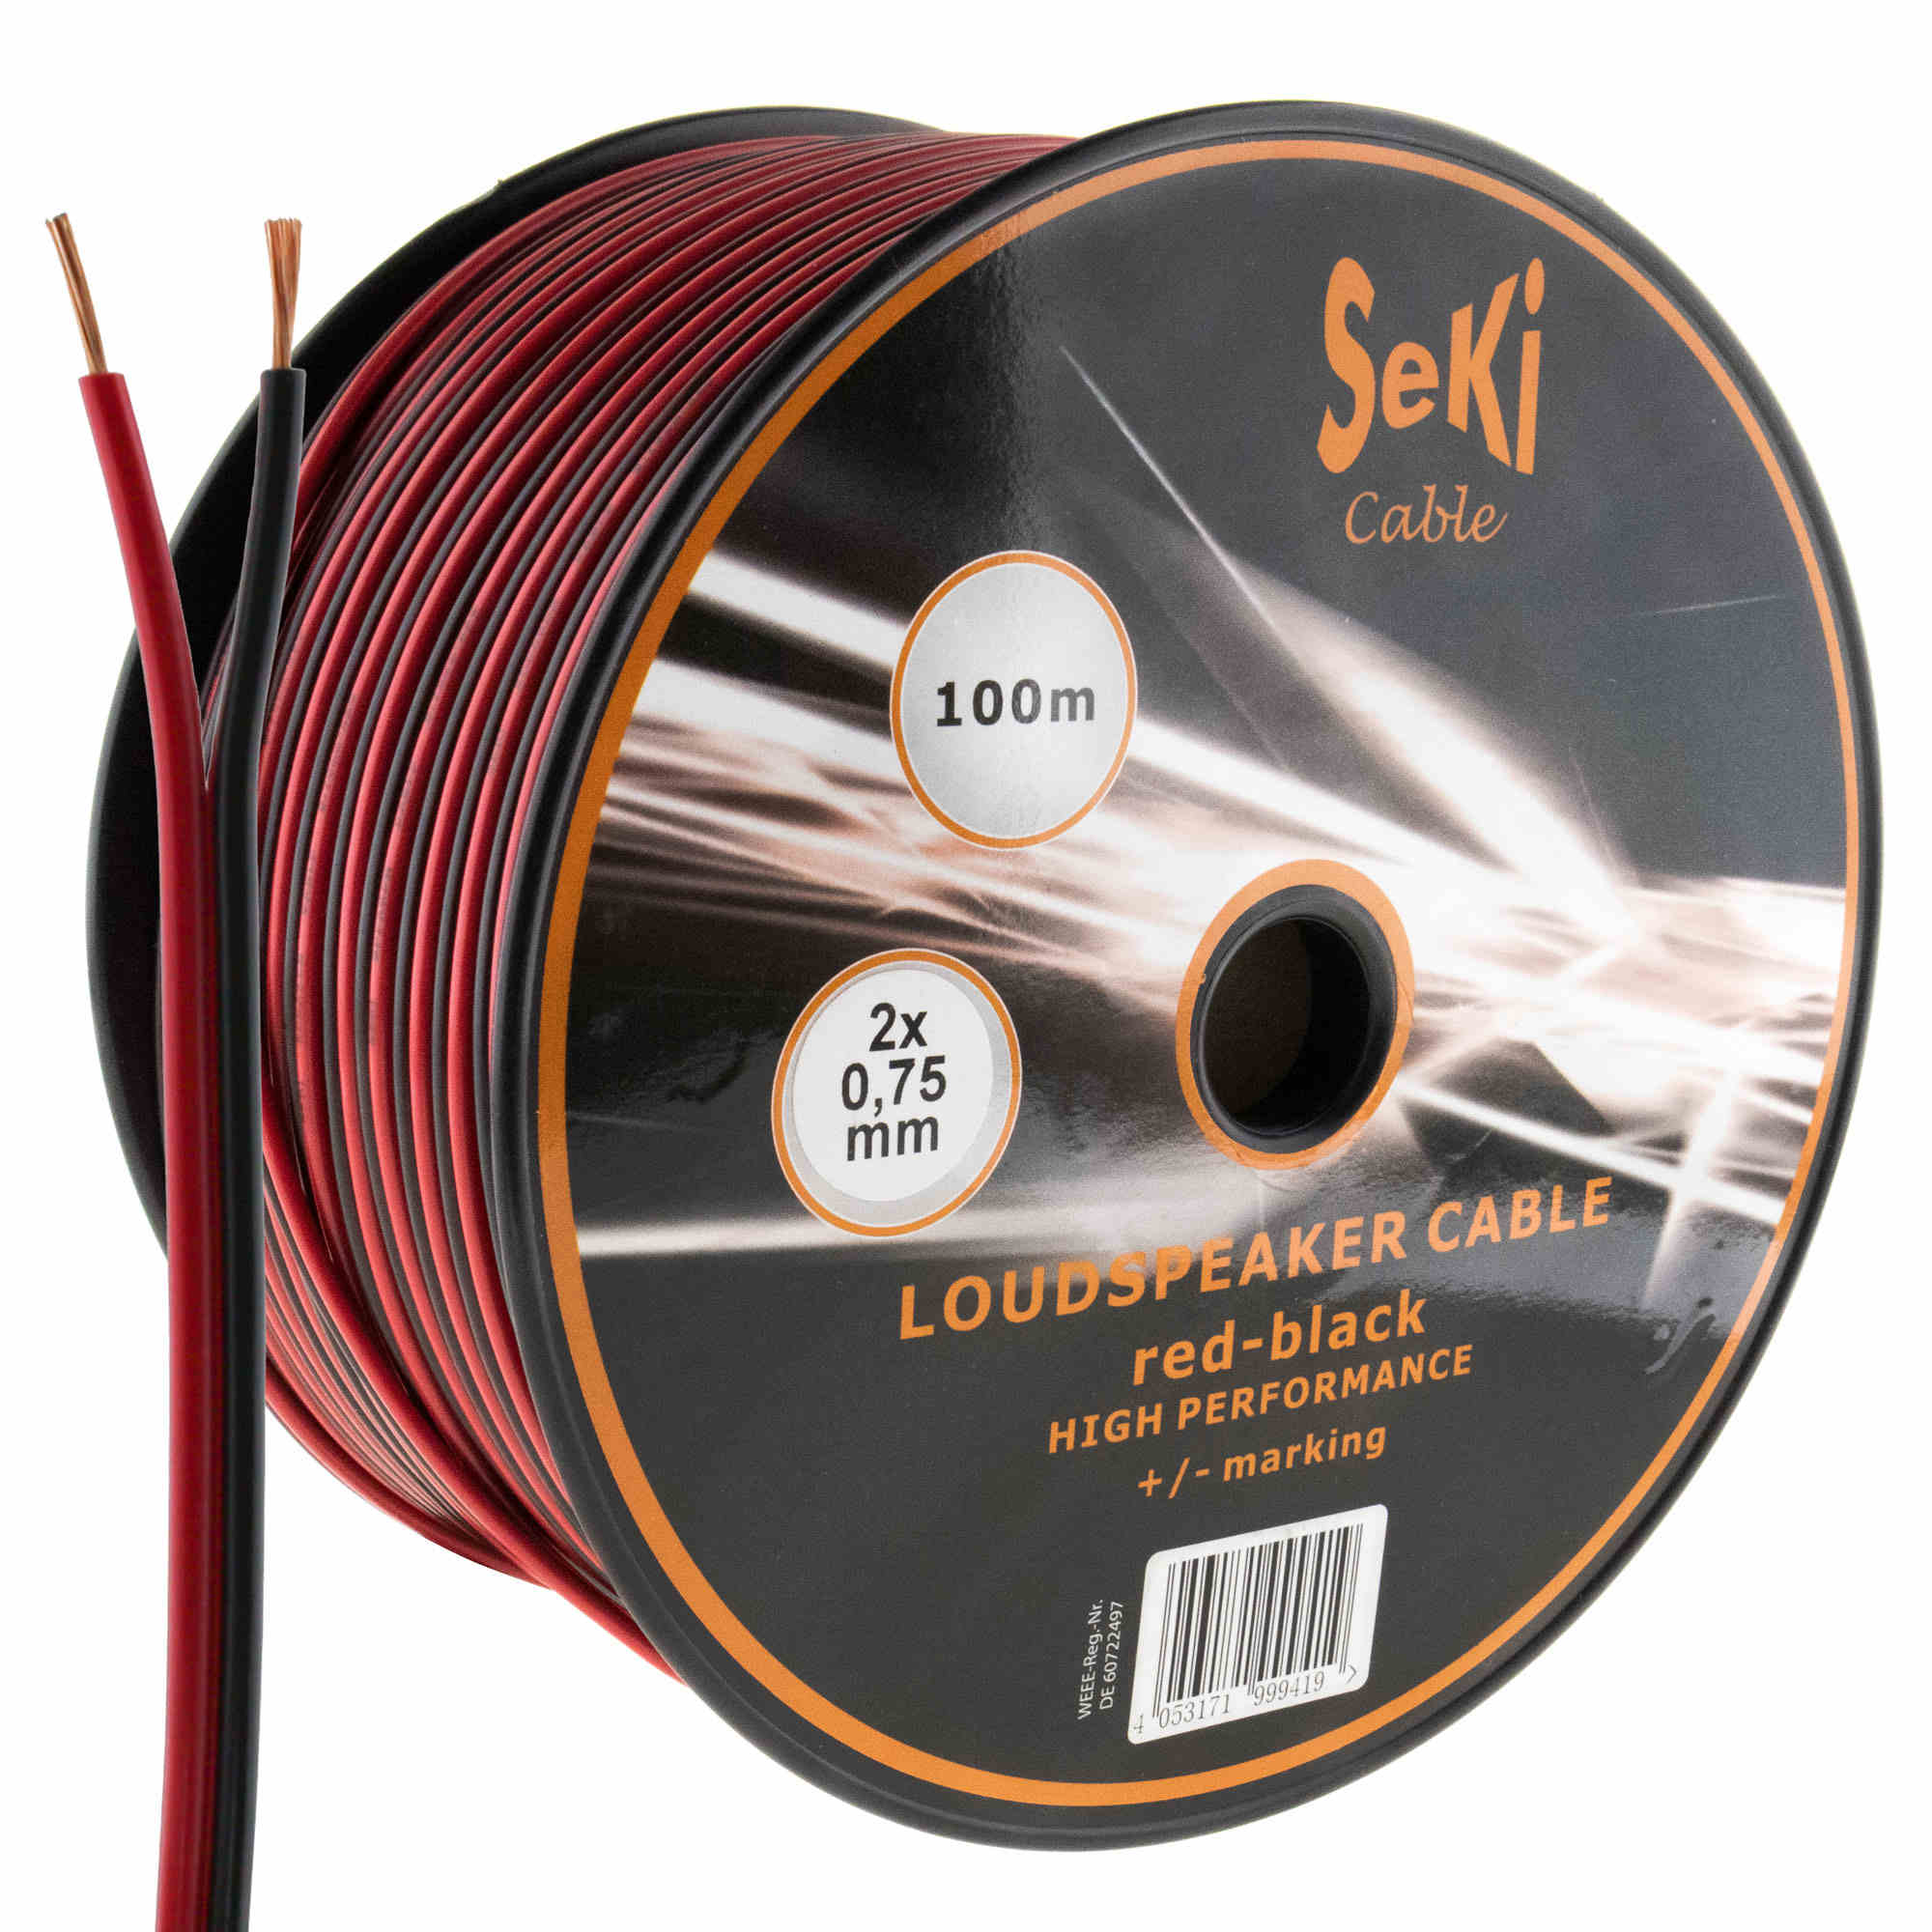 Loudspeaker cable red-black 100m 0.75mm